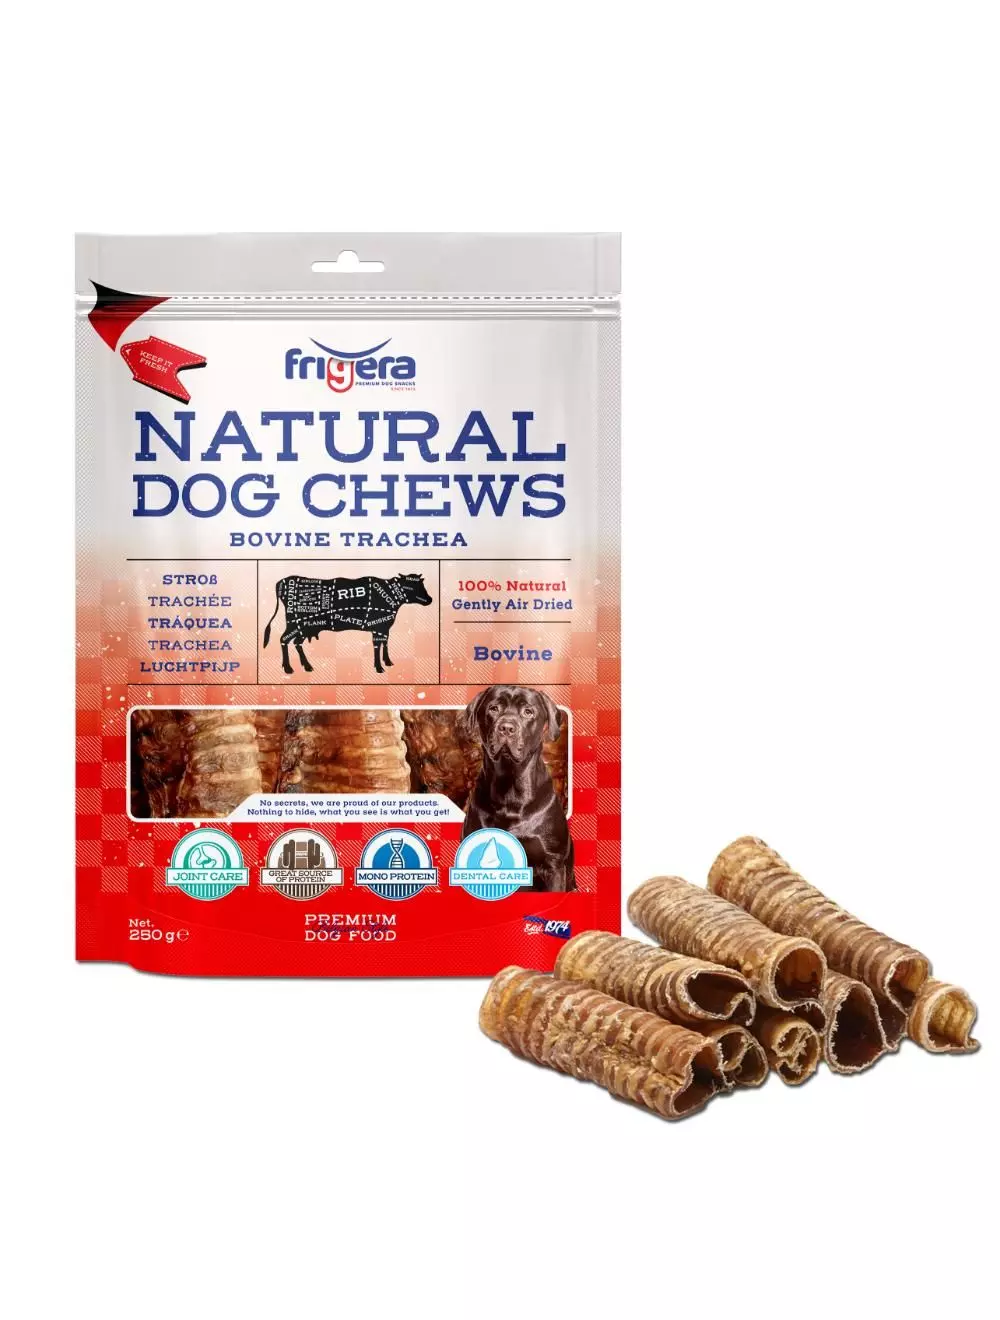 Frigera Natural Dog Chews Bovine Trachea